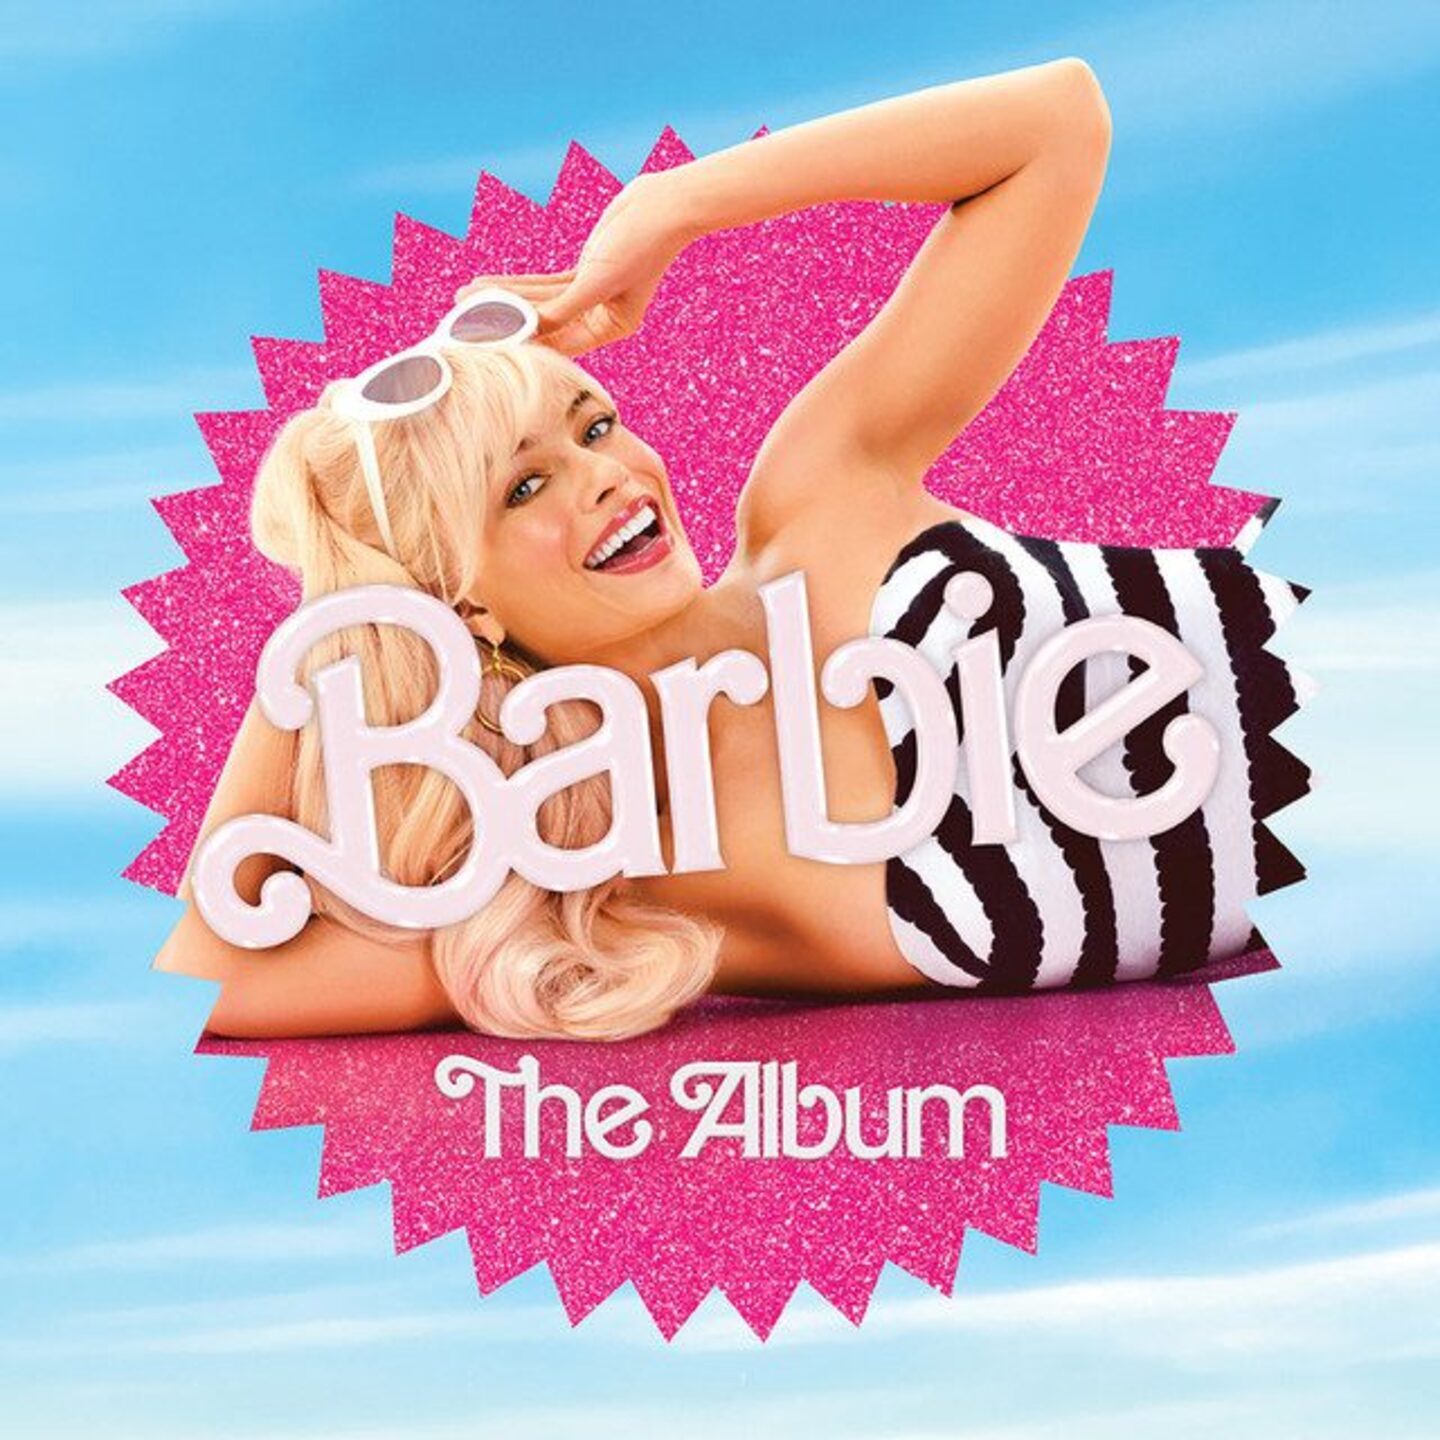 V/A - Barbie The Album (Official Soundtrack) LP (Hot Pink Vinyl)